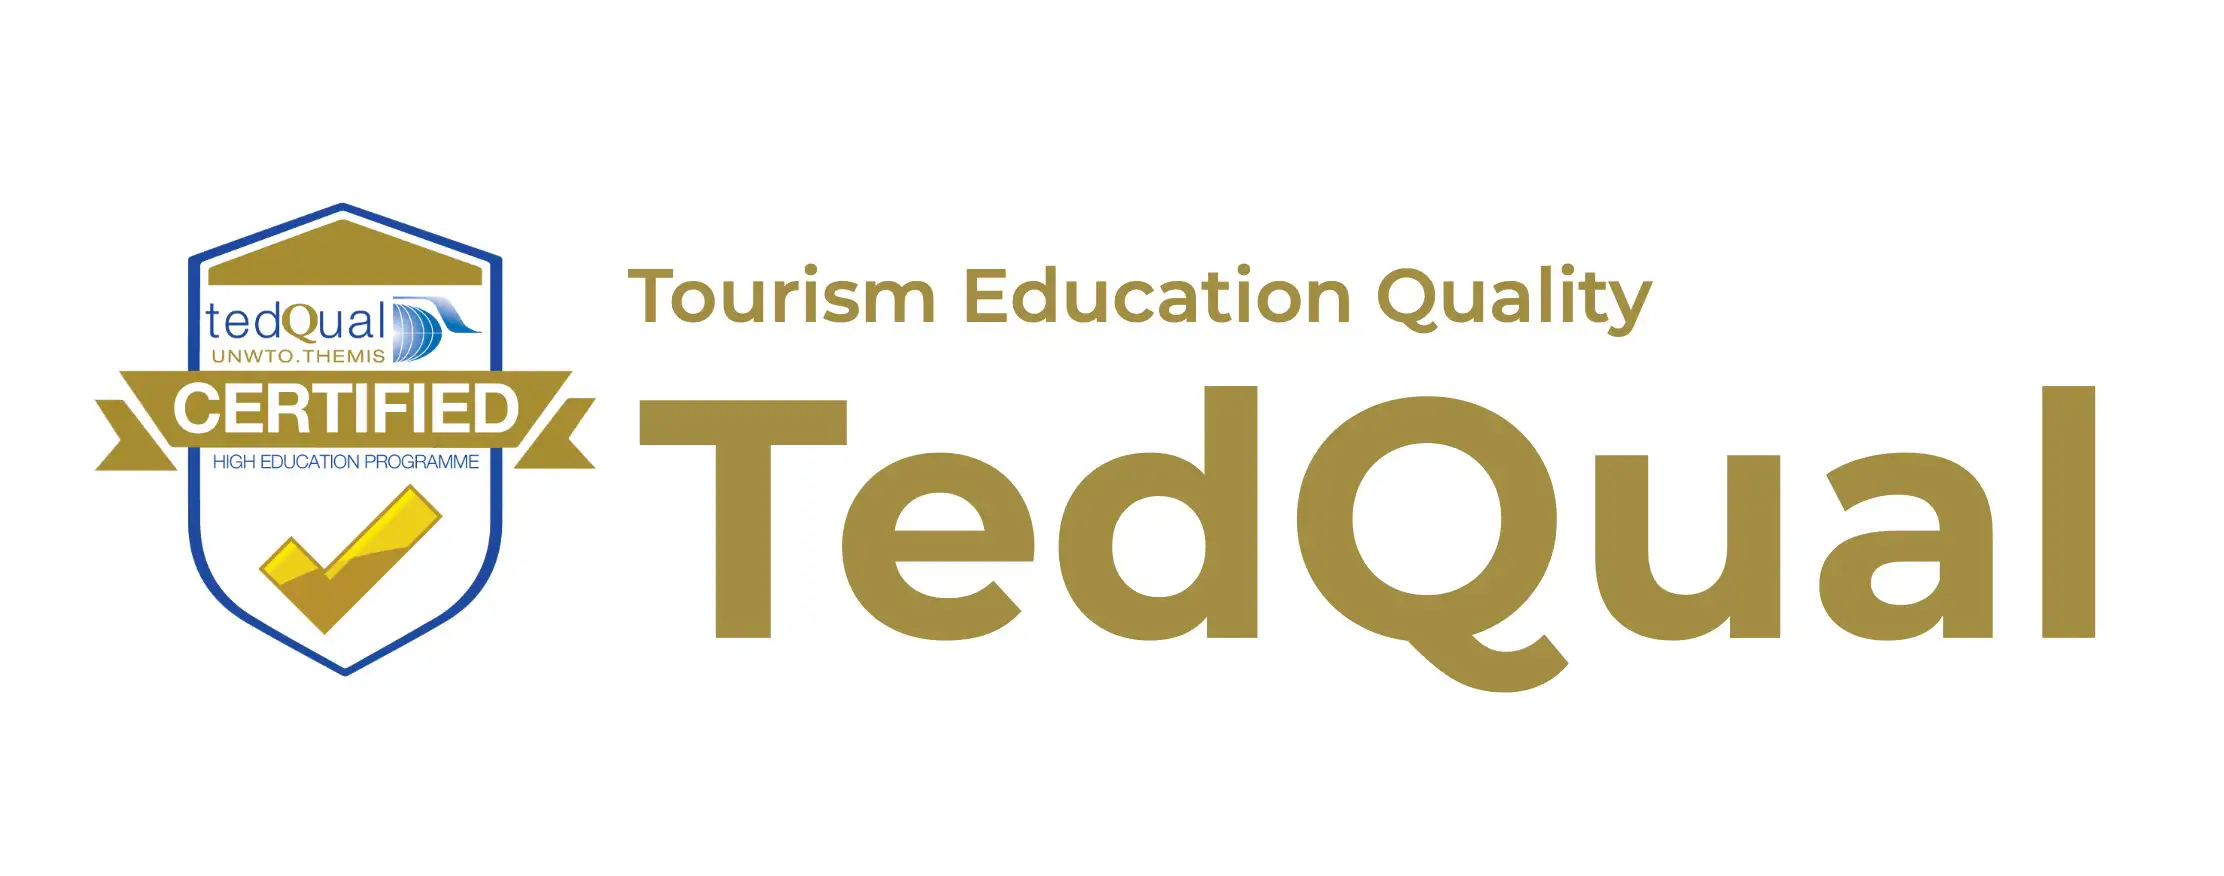 Tourism Education Quality